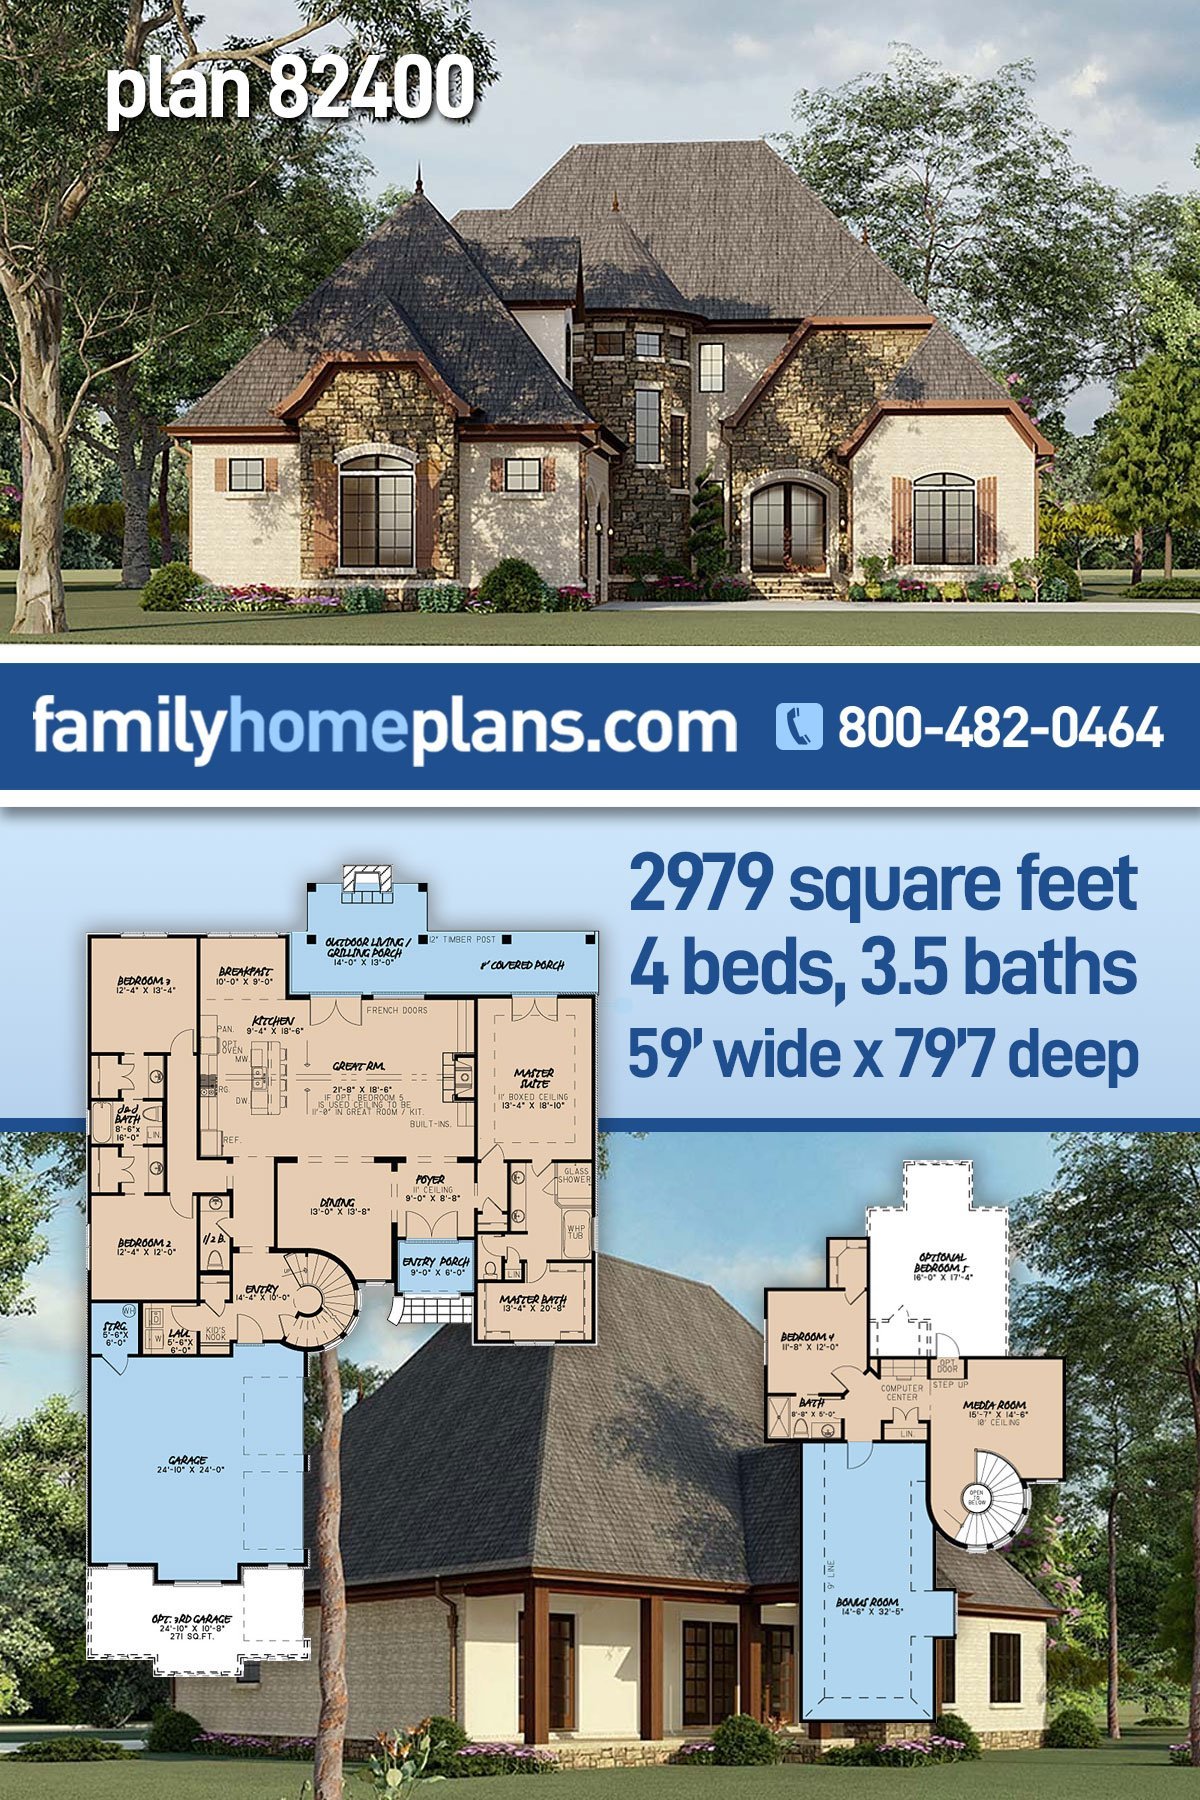 House Plan 82400